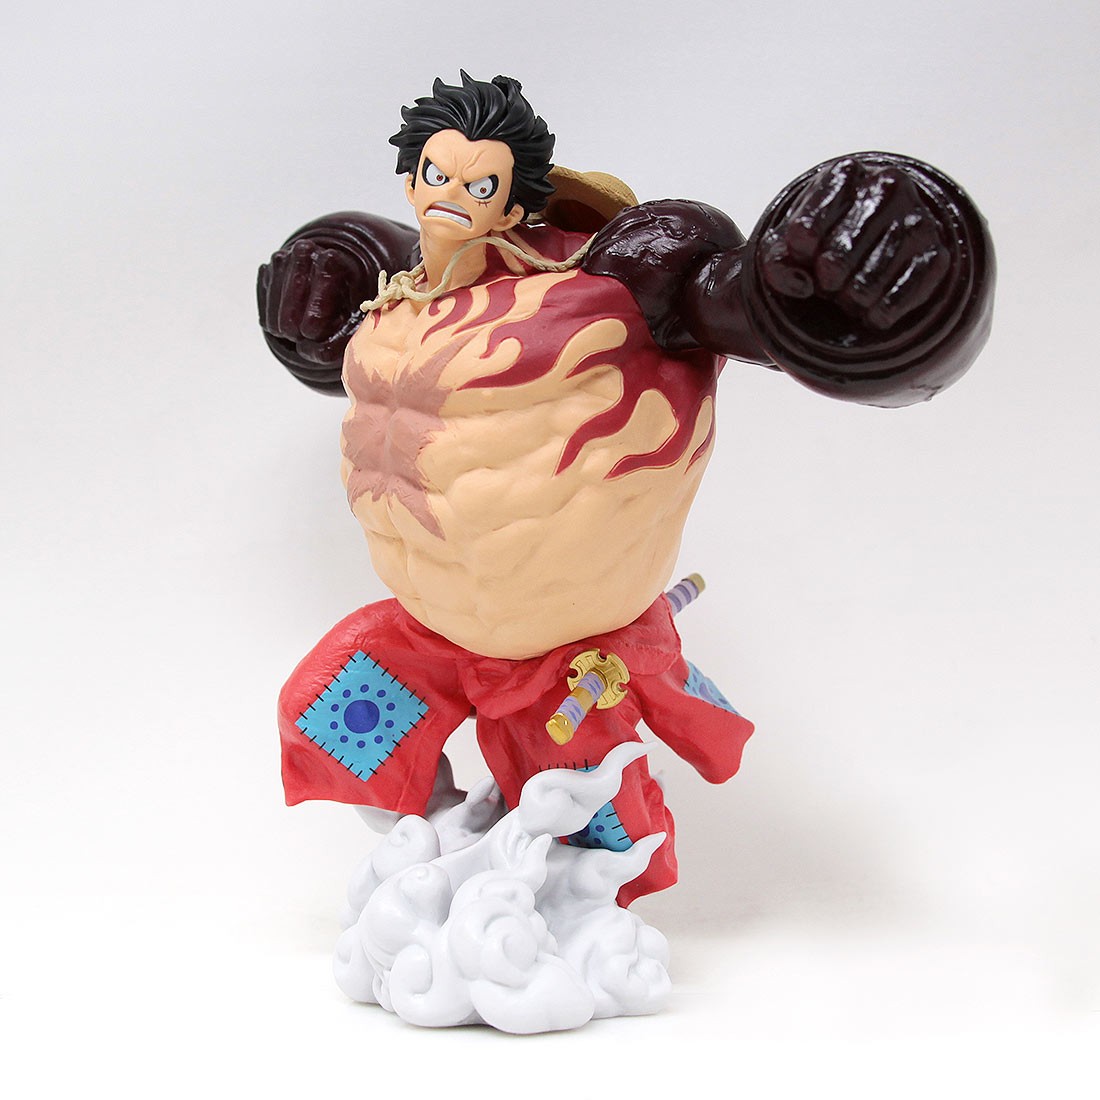 Banpresto One Piece, Monkey d. Luffy Gear 4 Figure, Super Master Stars  Piece Ver. b, Bandai em Promoção na Americanas